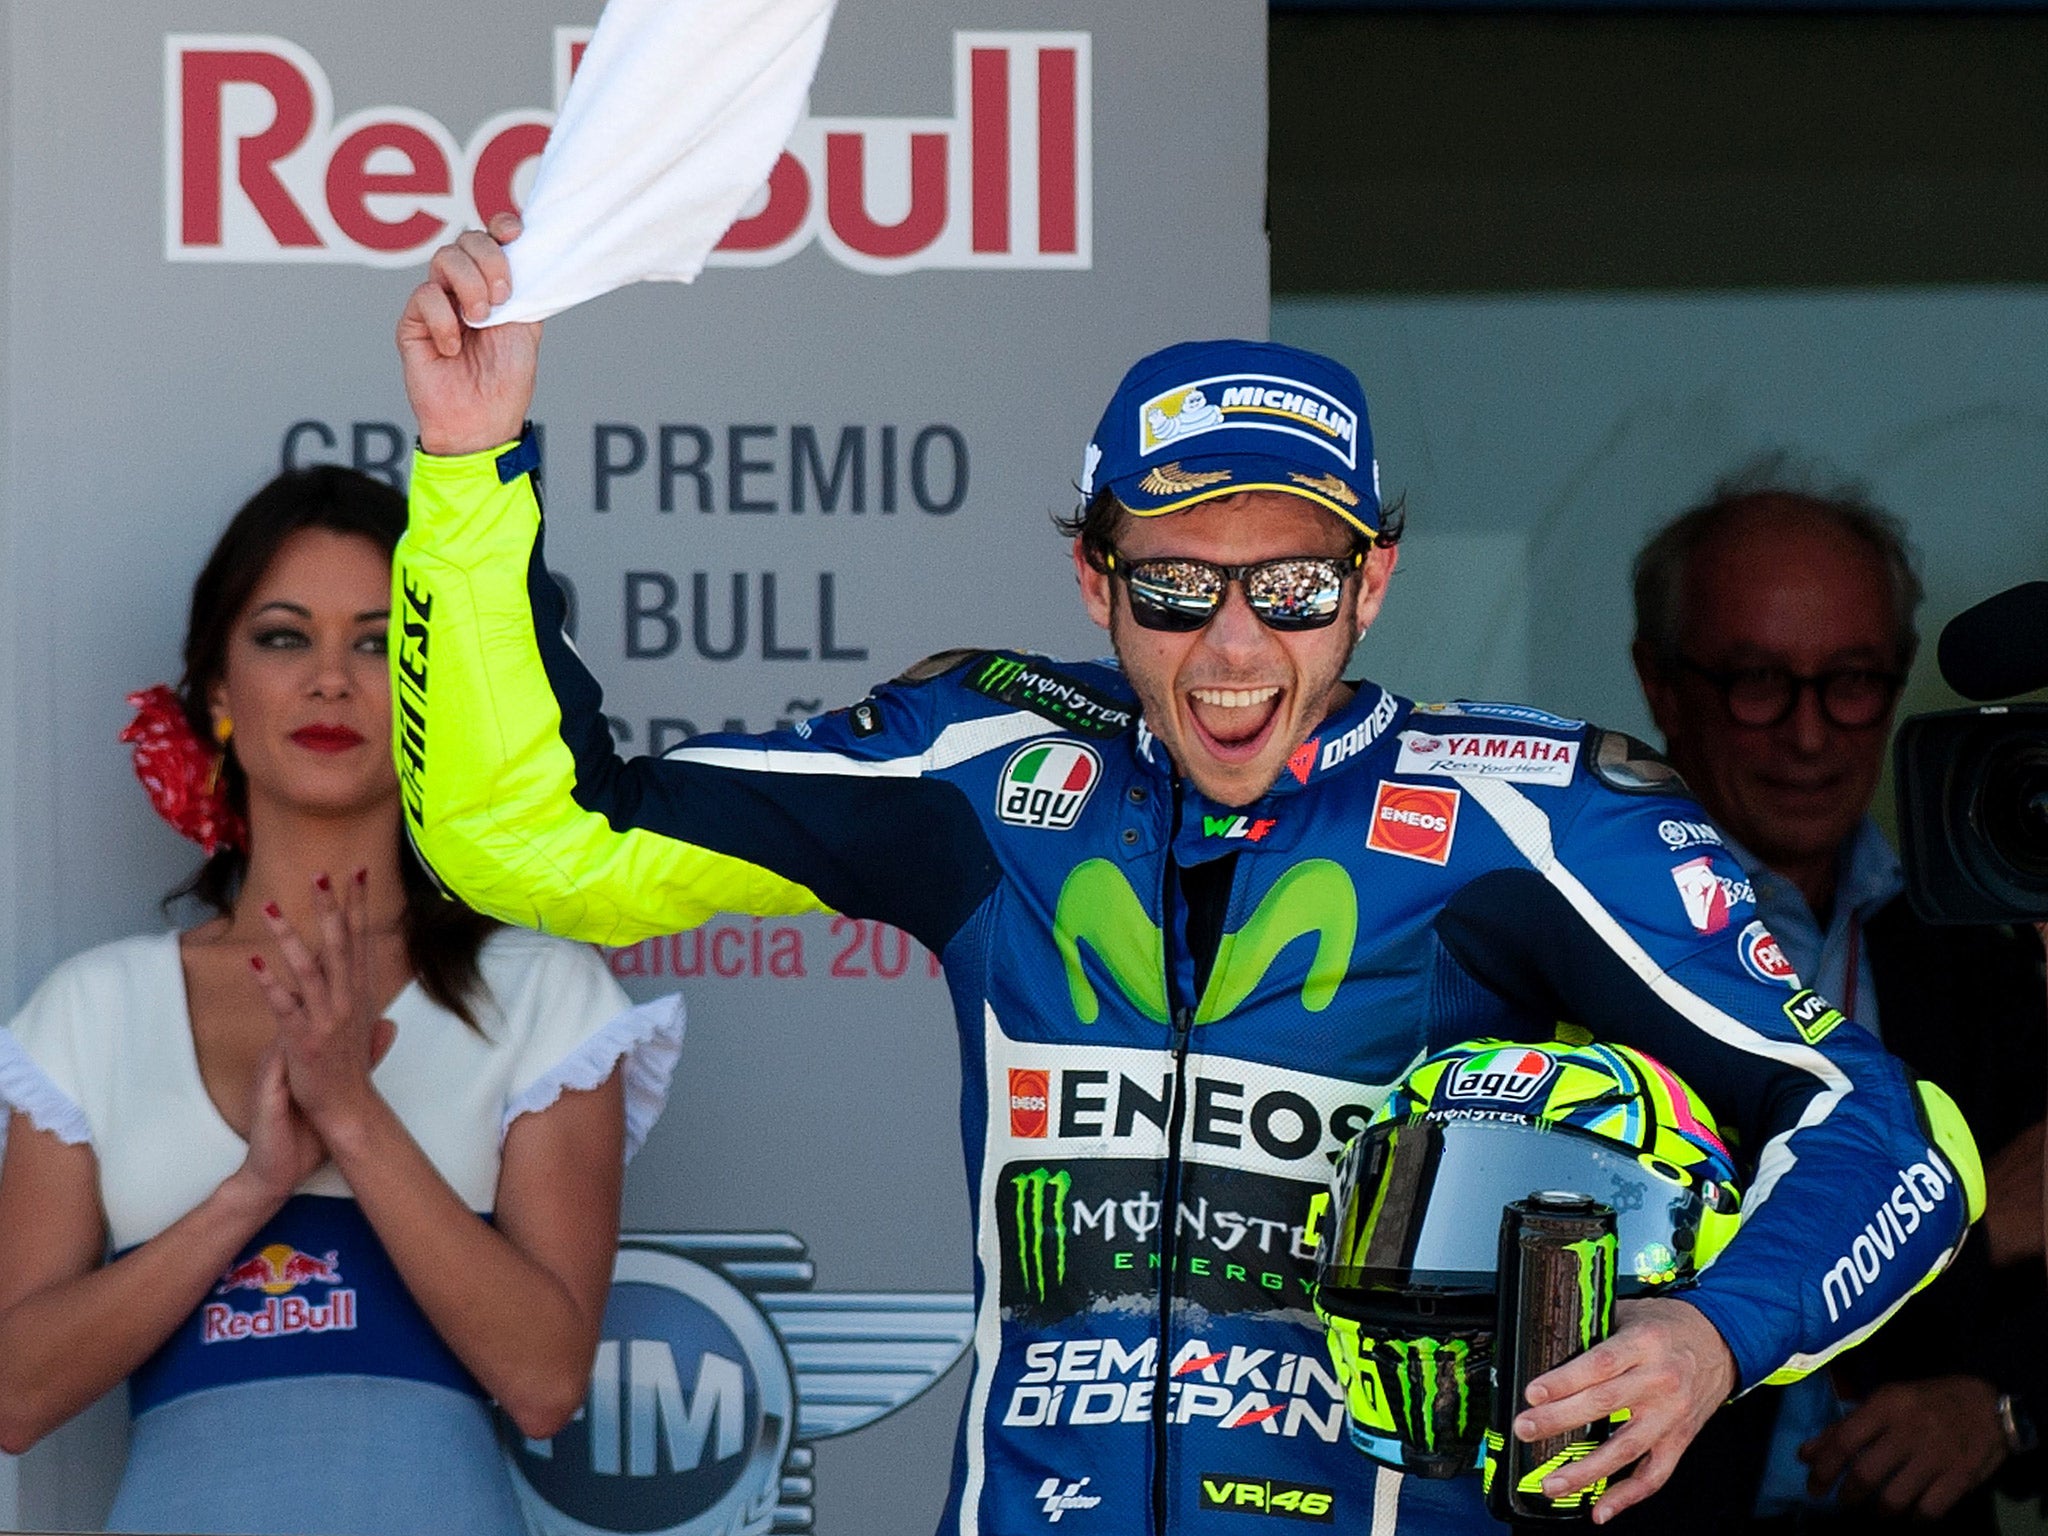 Valentino Rossi celebrates winning the Spanish Grand Prix at Jerez